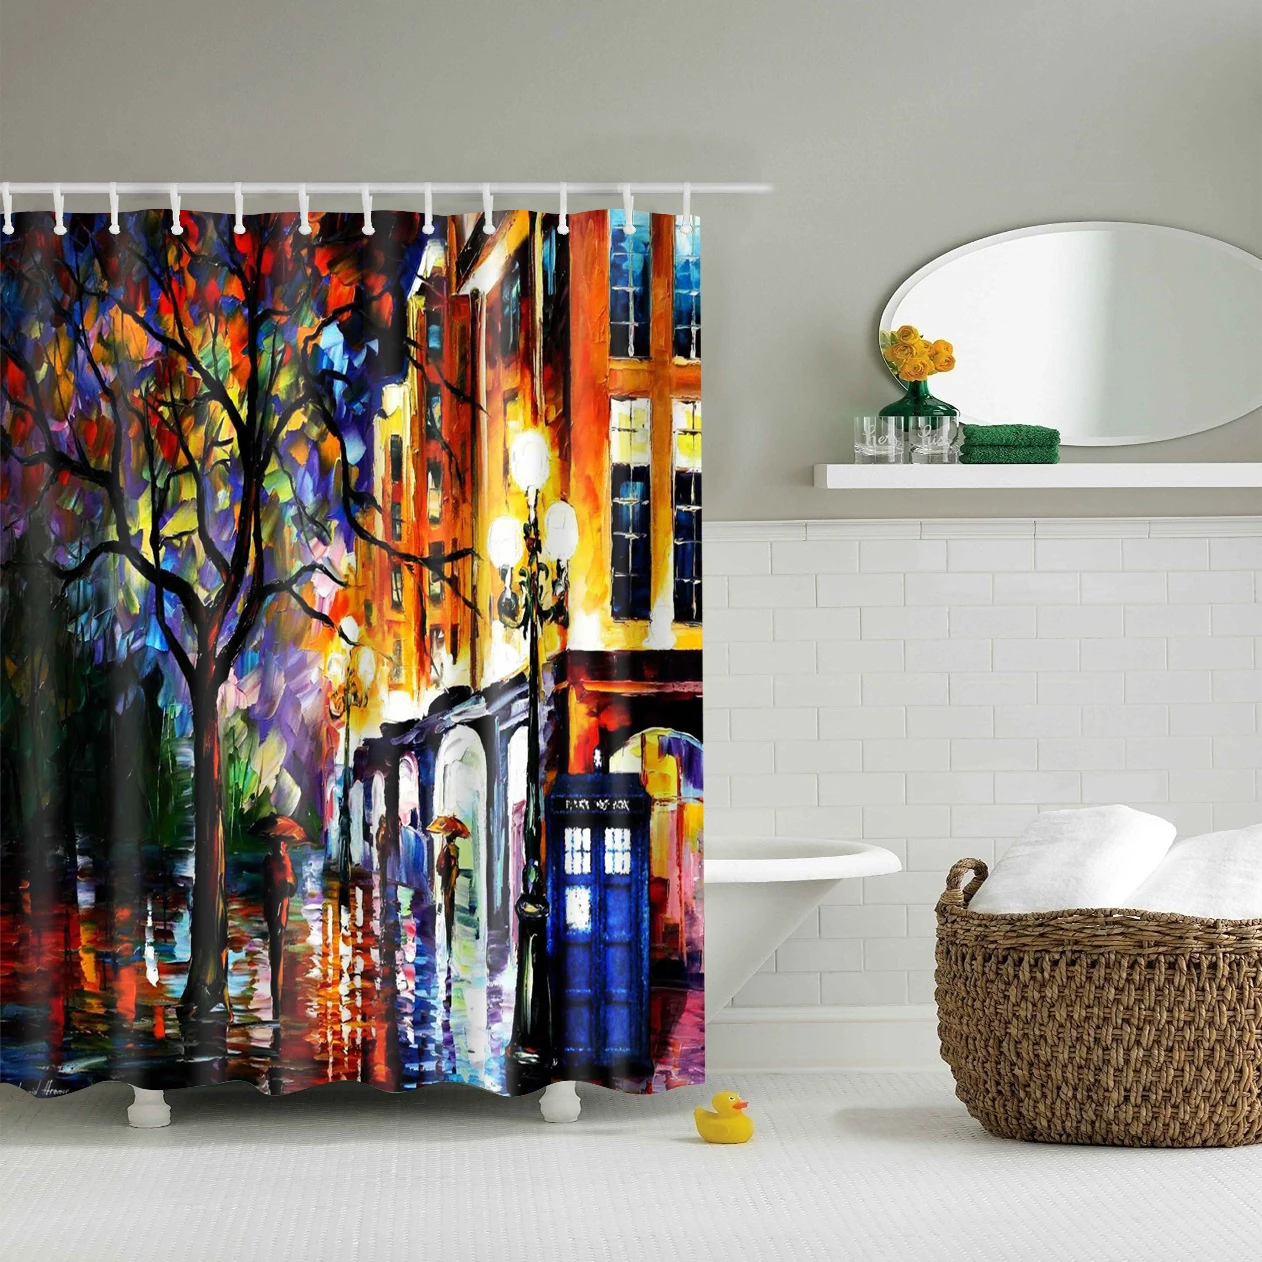 Oil painting print Shower Curtain Long 180x200cm Waterproof polyester blackout 3D print Bath curtain for bathroom curtain - Цвет: B